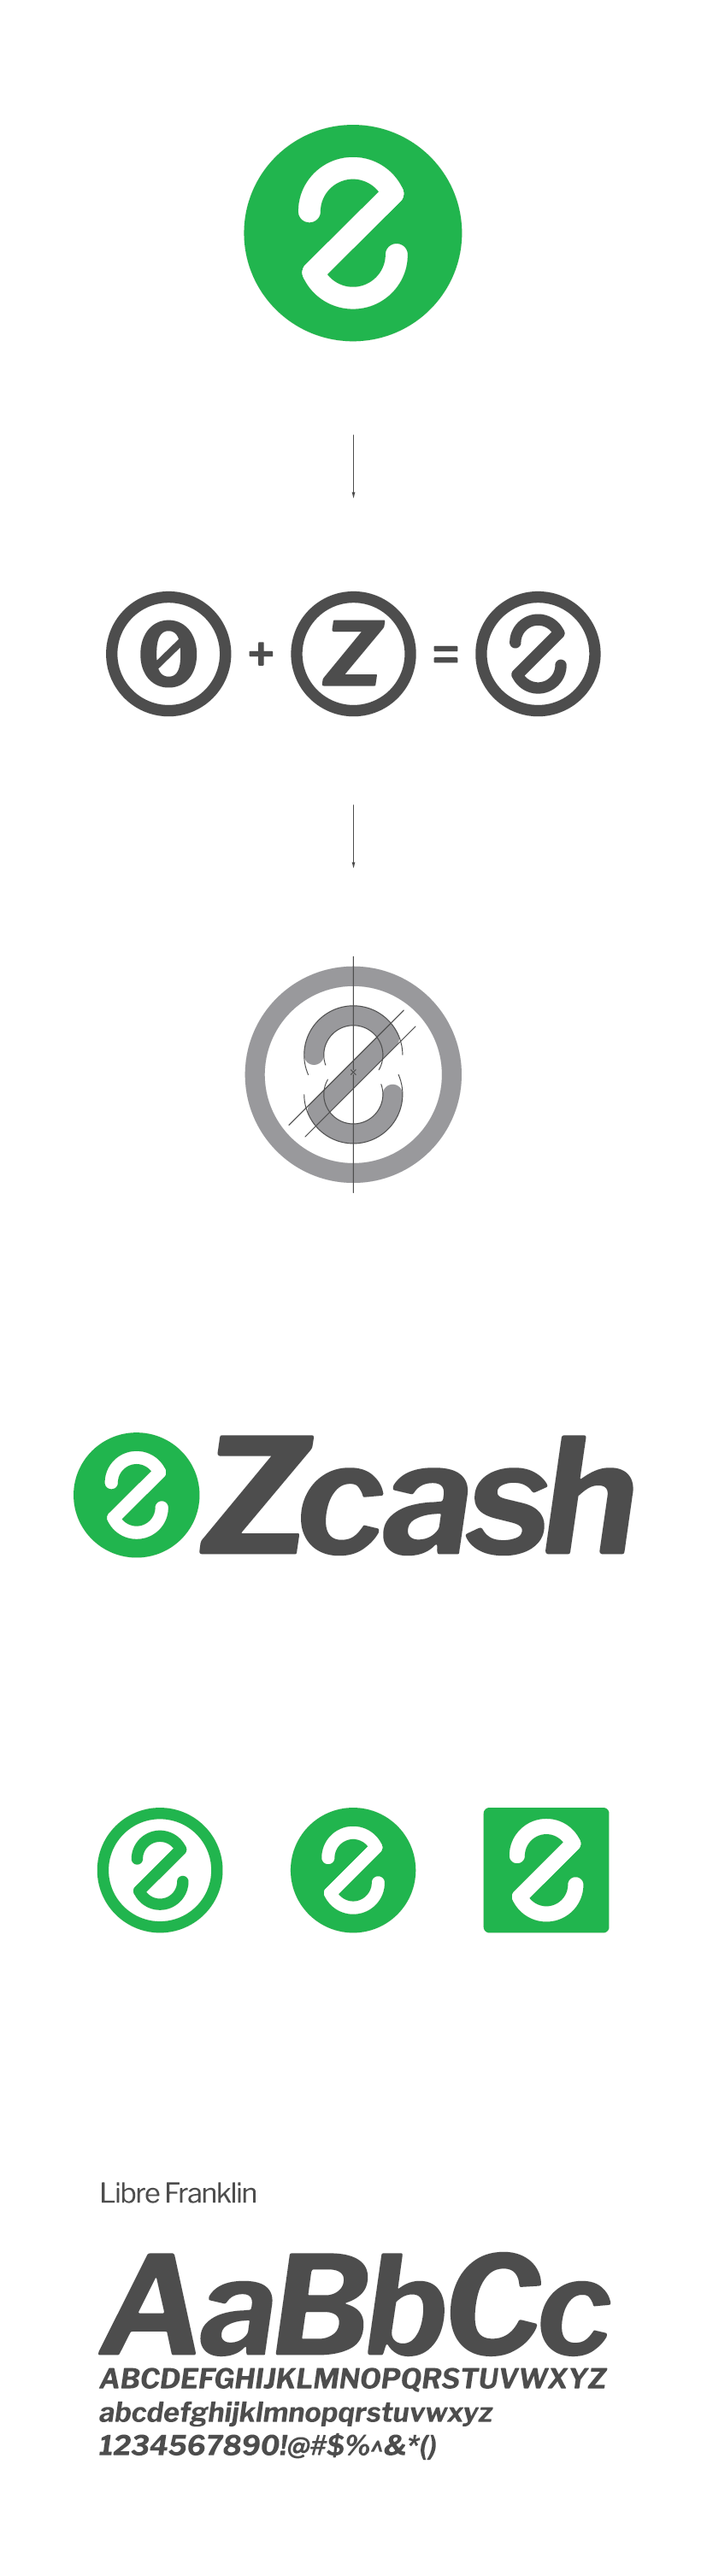 Zcash Logo - Zcash altcoin cryptocurrency bitcoin logo visual identity id ...